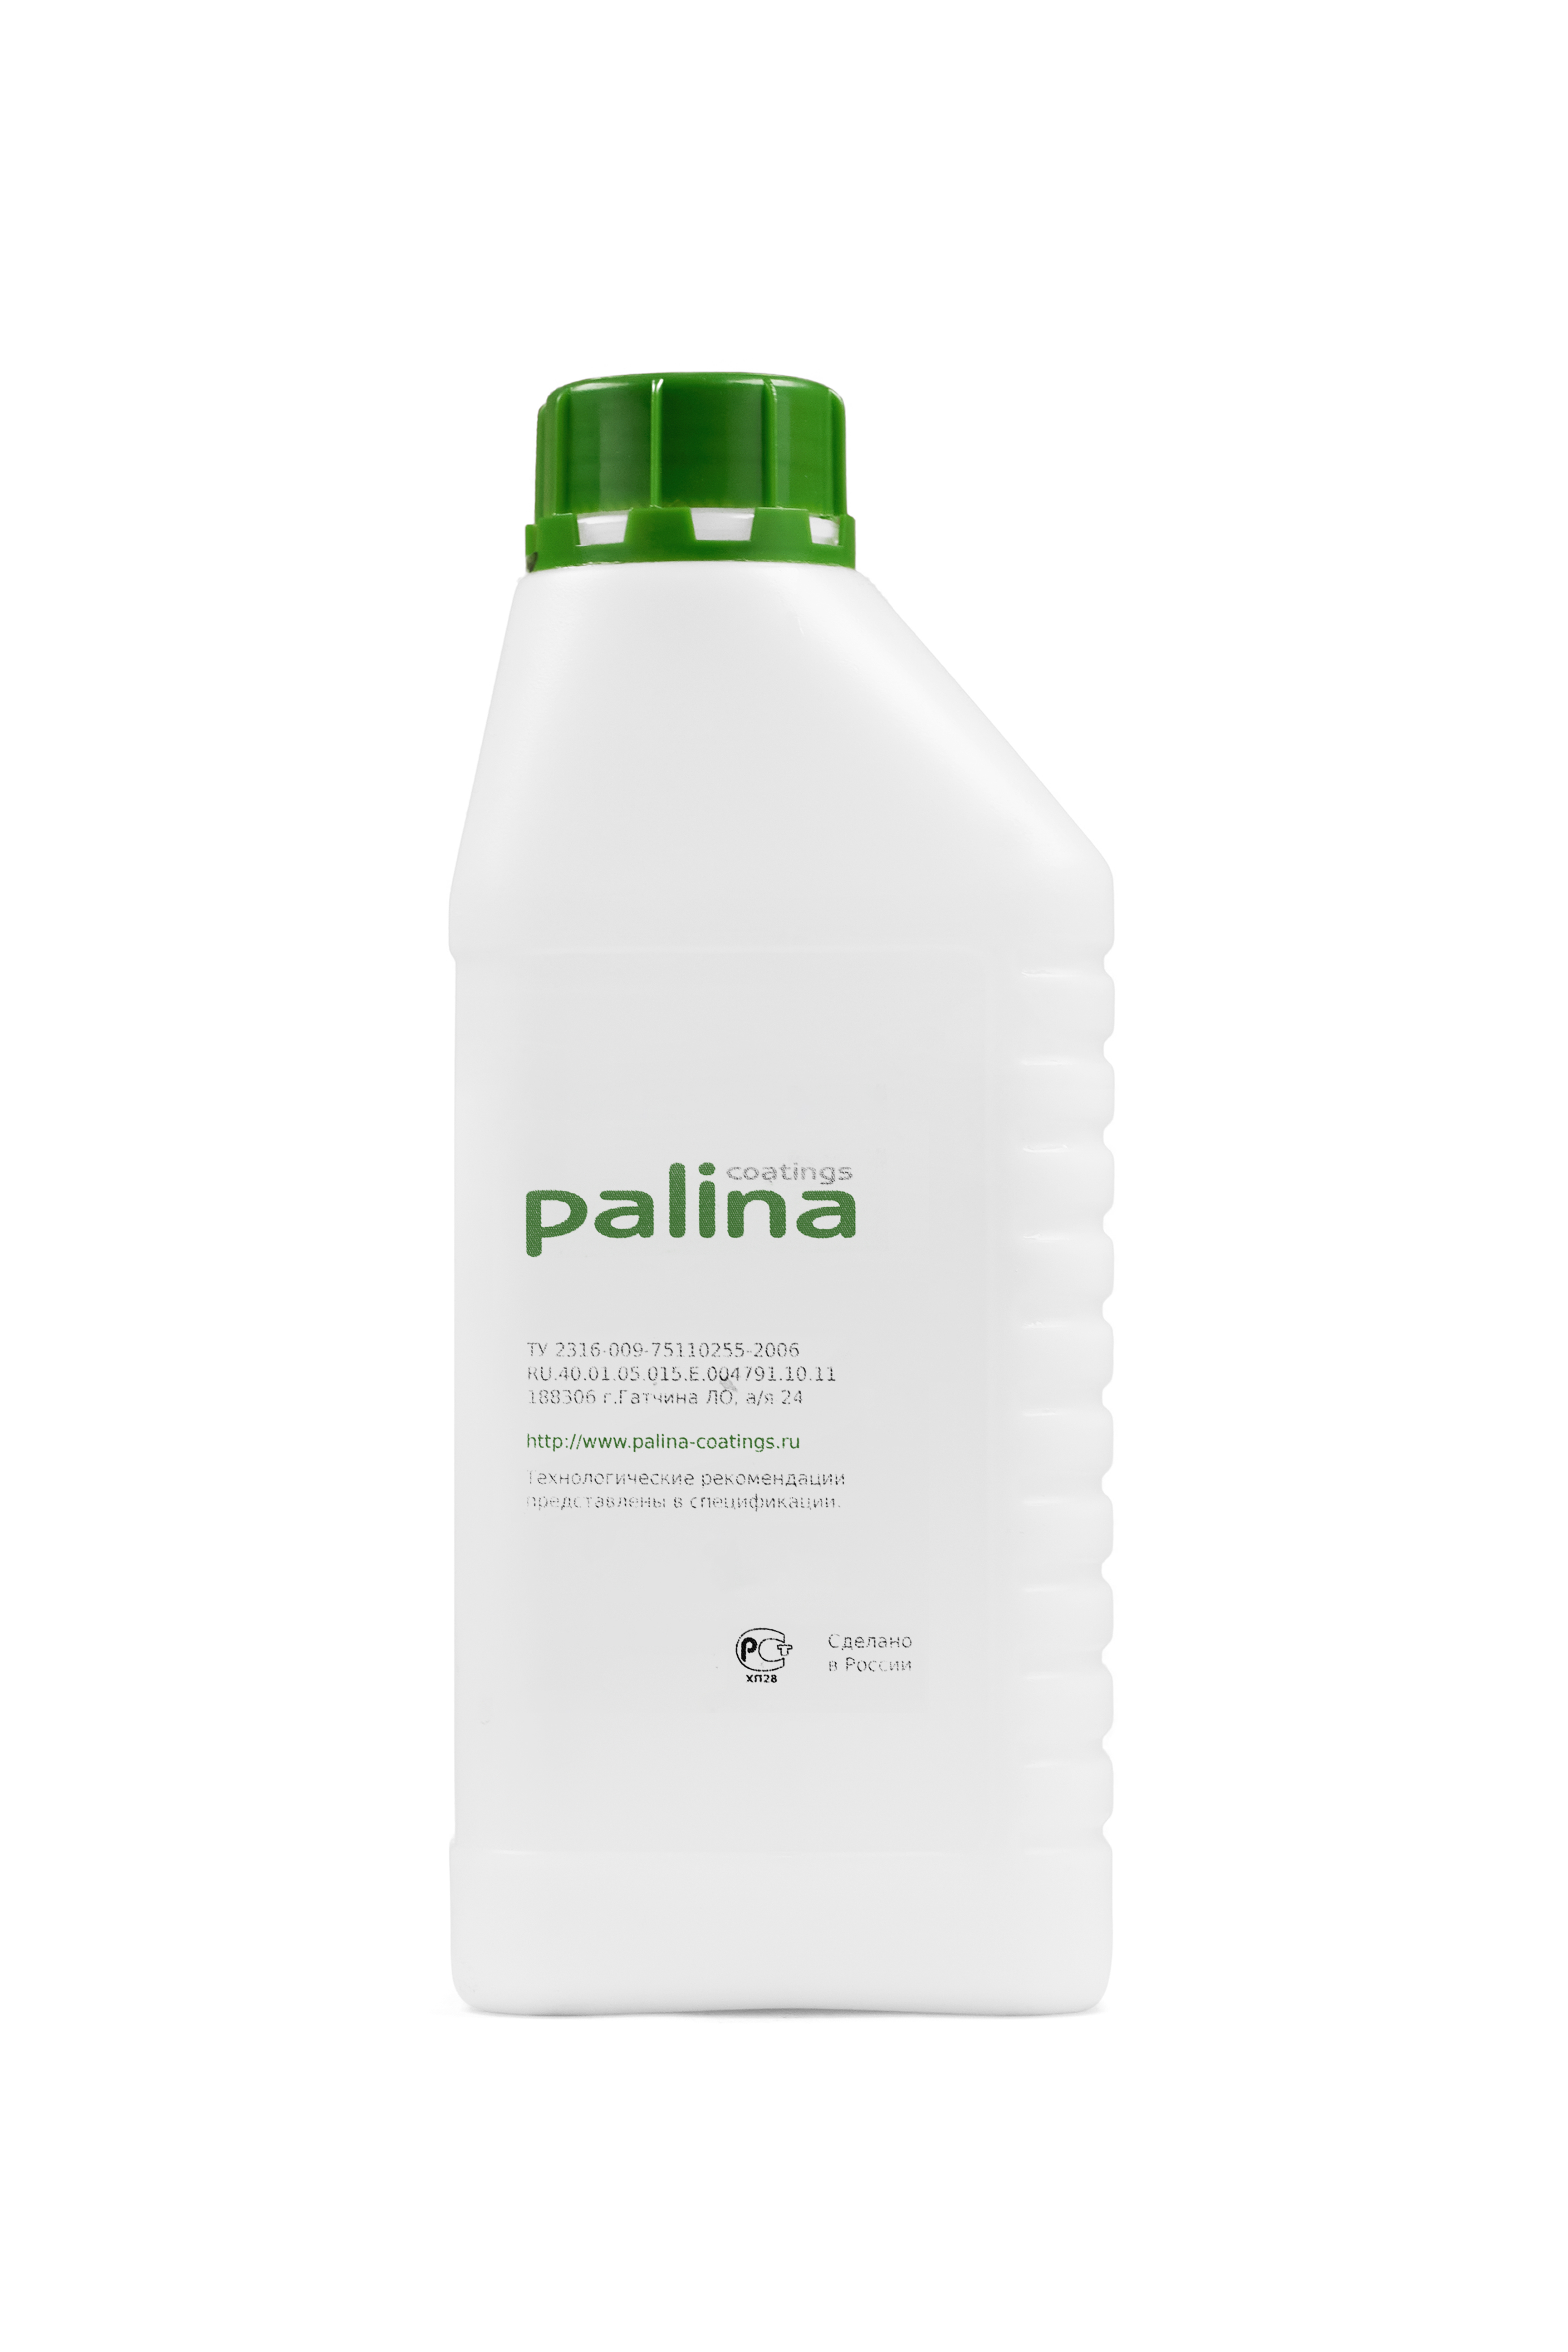 PaliPlast PL – акриловые краски для пластика АБС